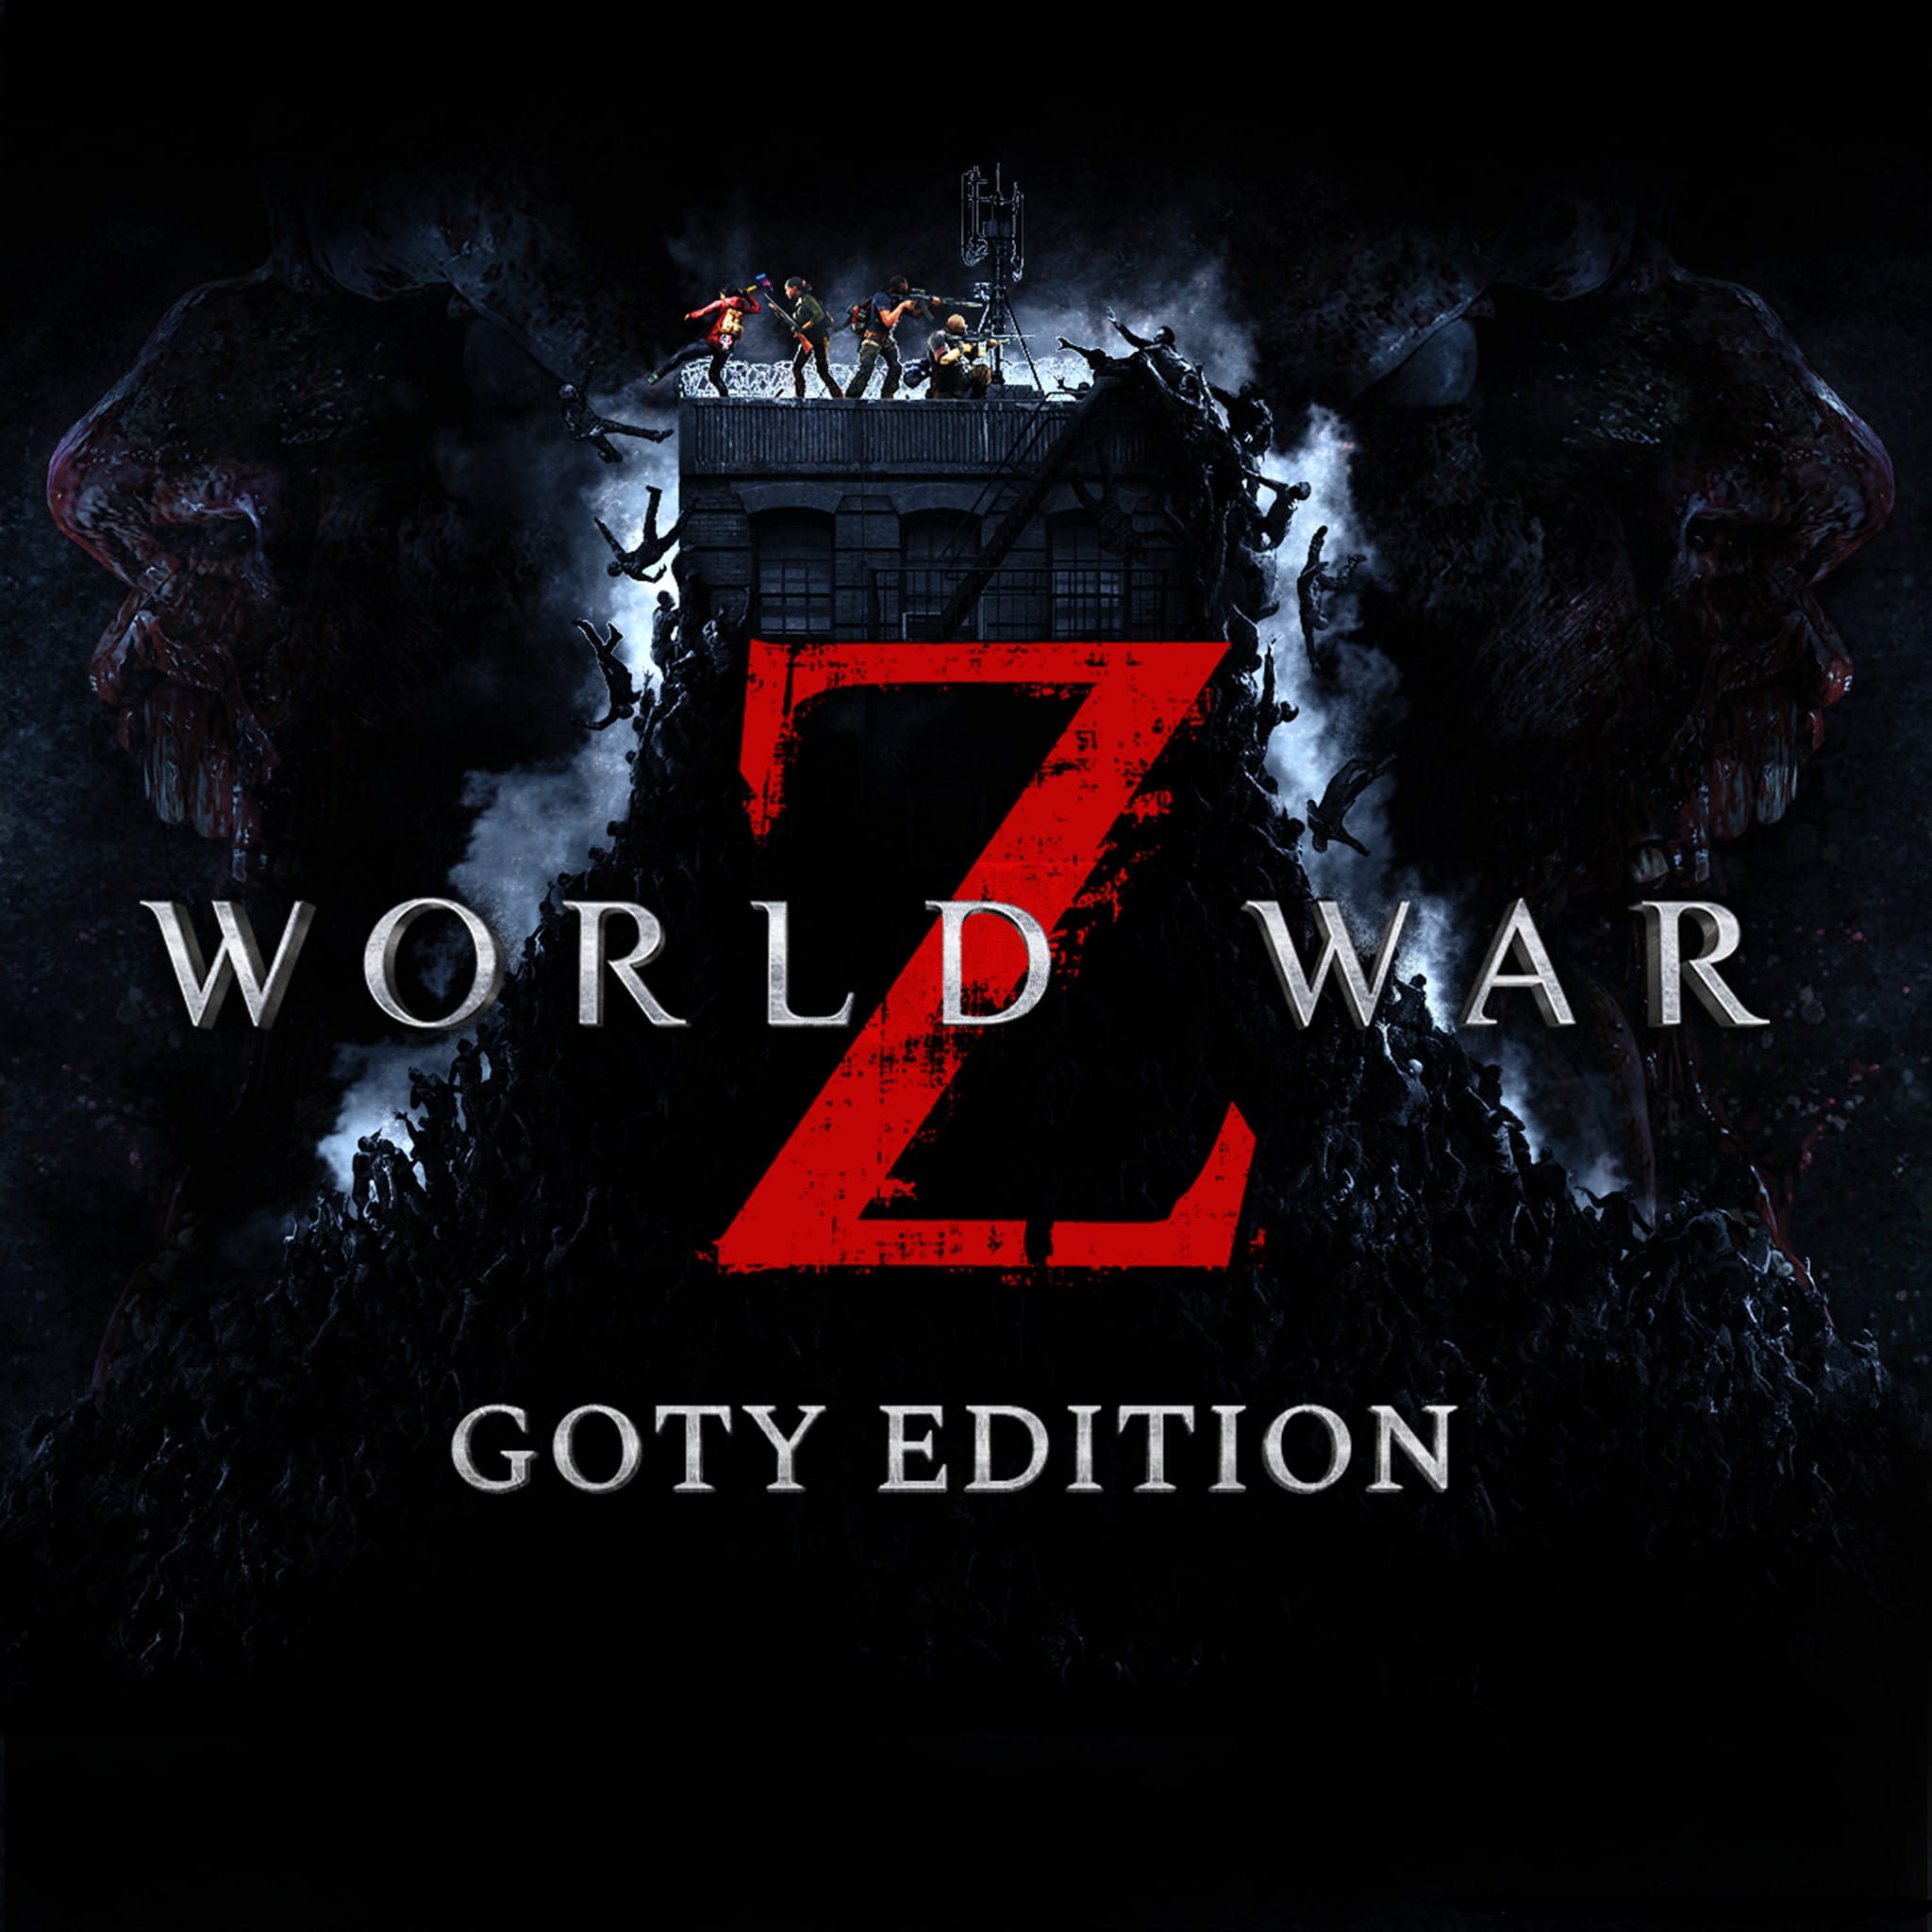 world war z playstation 4